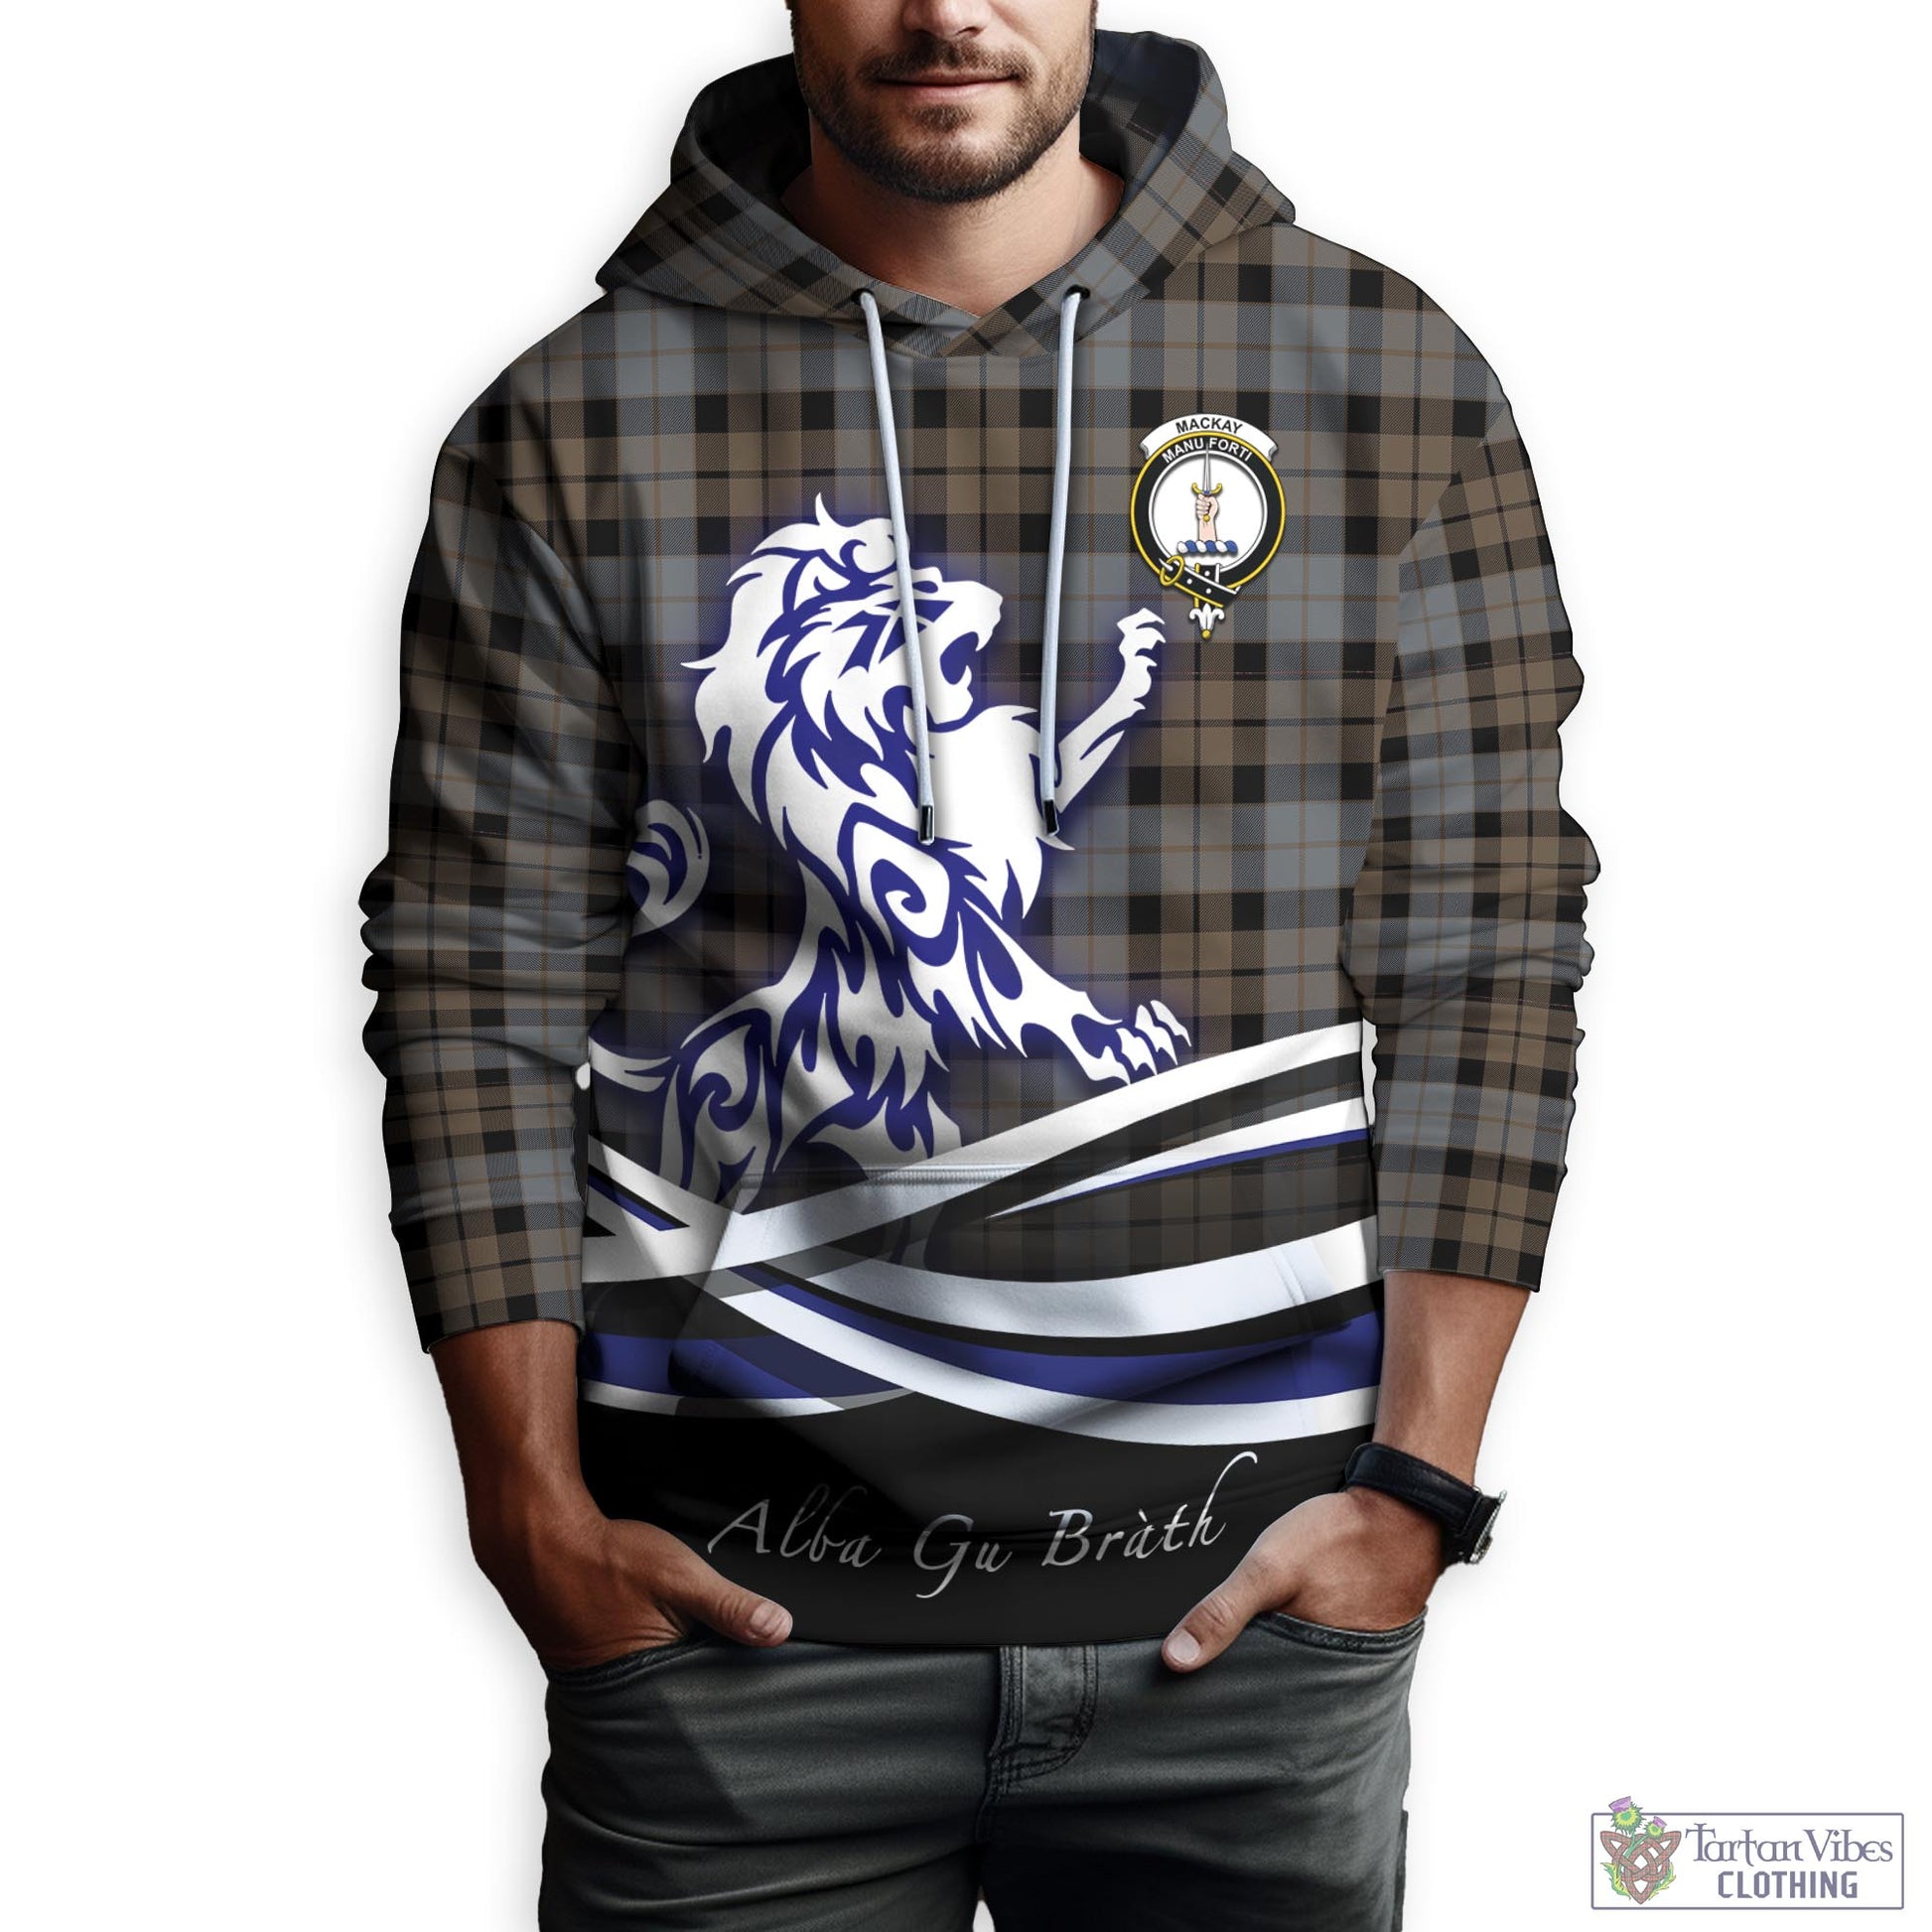 mackay-weathered-tartan-hoodie-with-alba-gu-brath-regal-lion-emblem